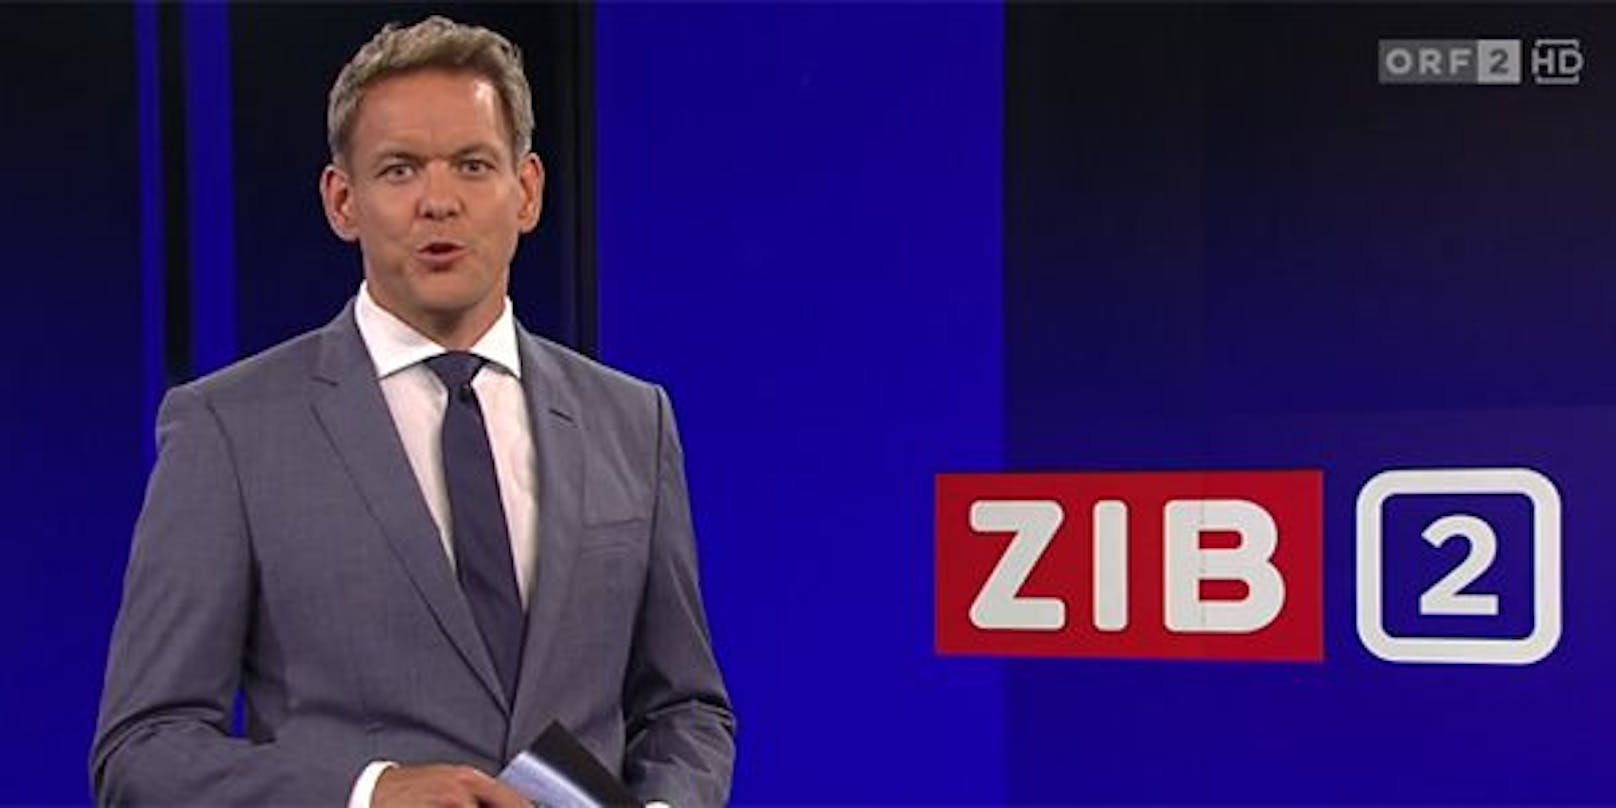 War kurze Zeit sprachlos: ORF-"ZiB 2"-Moderator Martin Thür.